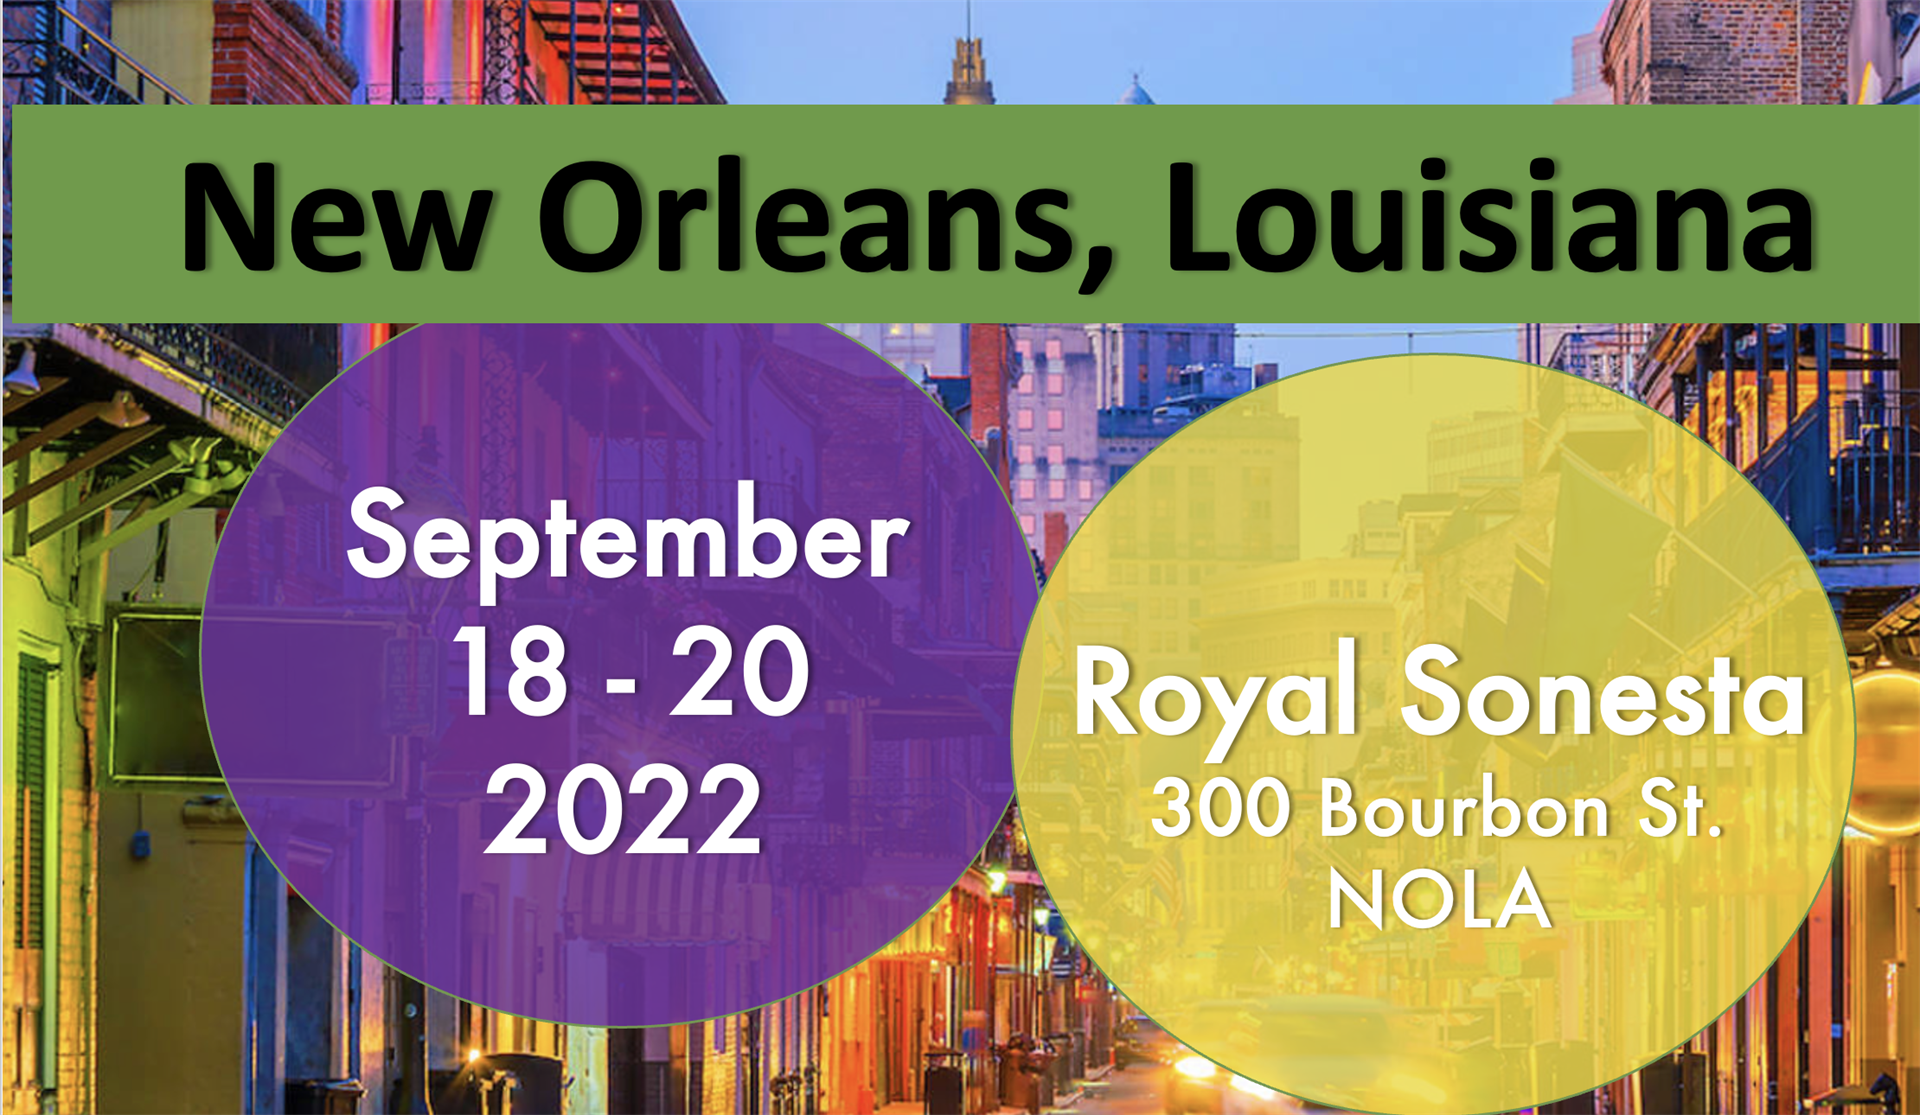 New Orleans, Louisiana - September 18-20, 2022 - Royal Sonesta, 300 Bourbon Street, NOLA